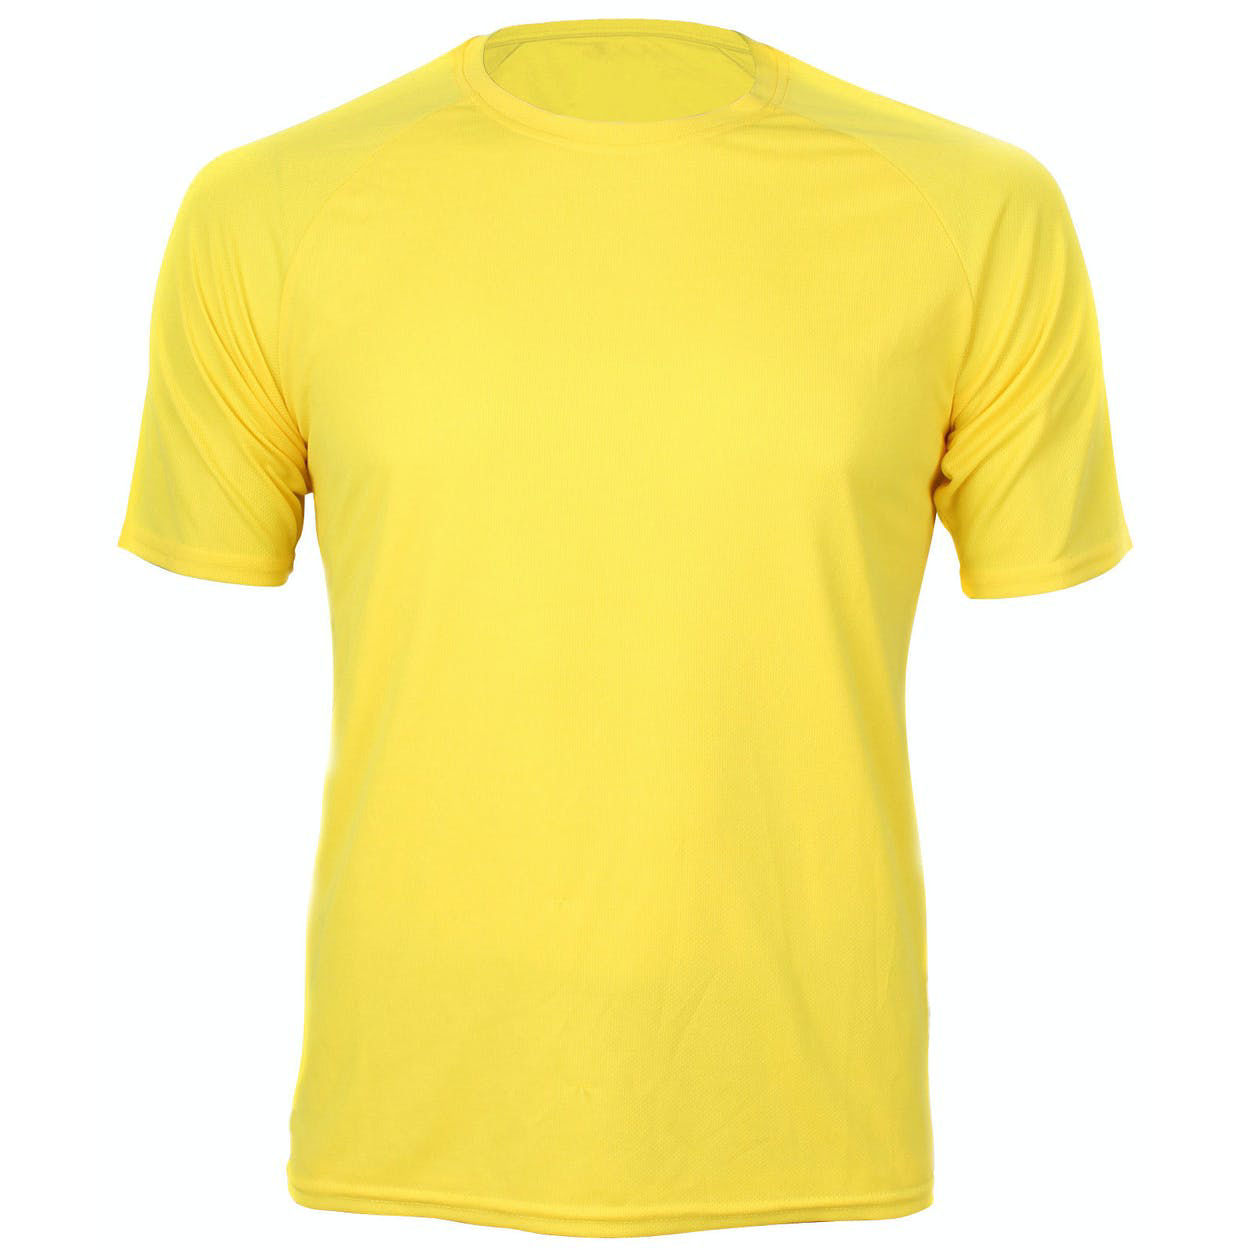 Gato Sports Tech T-shirt HERR - Gul